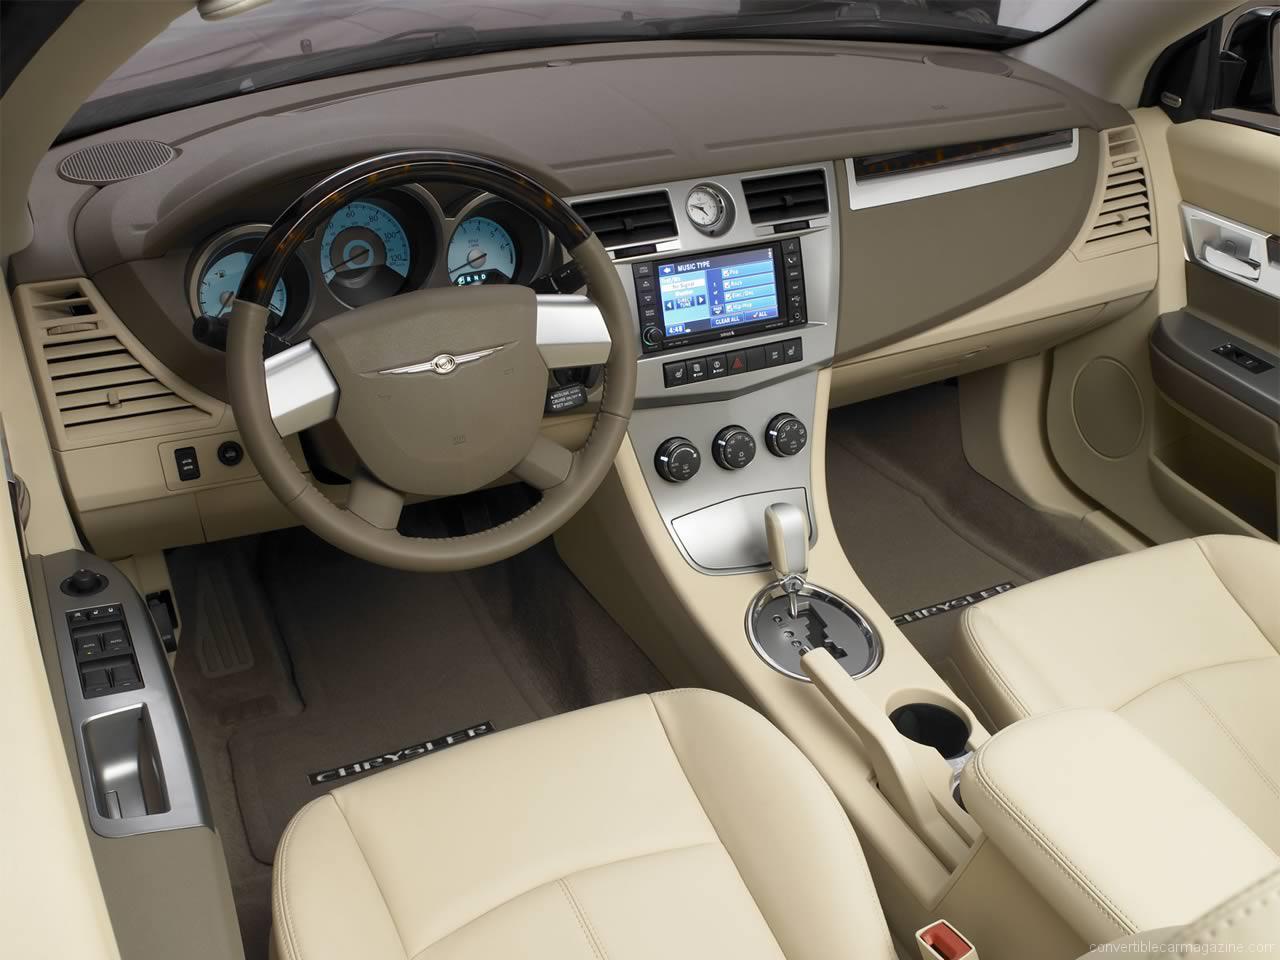 2005 Chrysler sebring convertible options